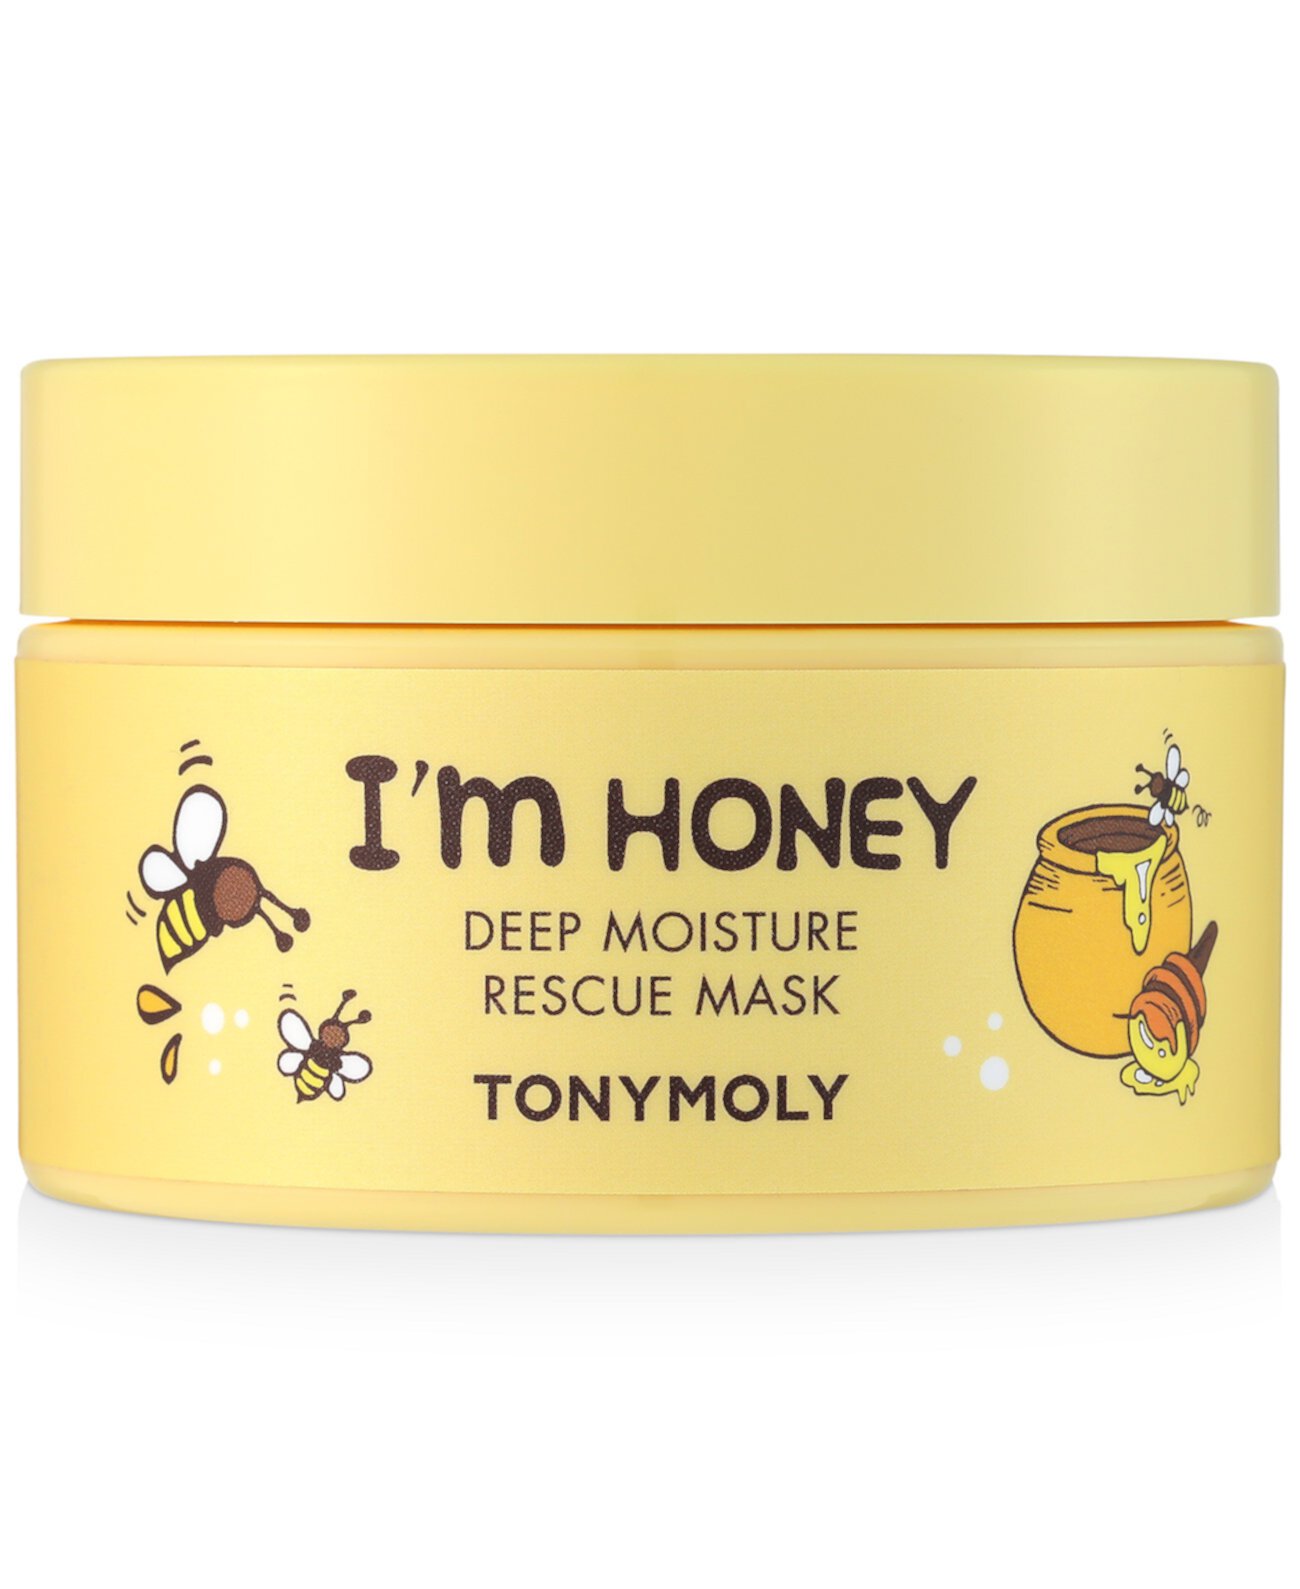 Спасательная маска I'm Honey Deep Moisture Rescue Mask TONYMOLY